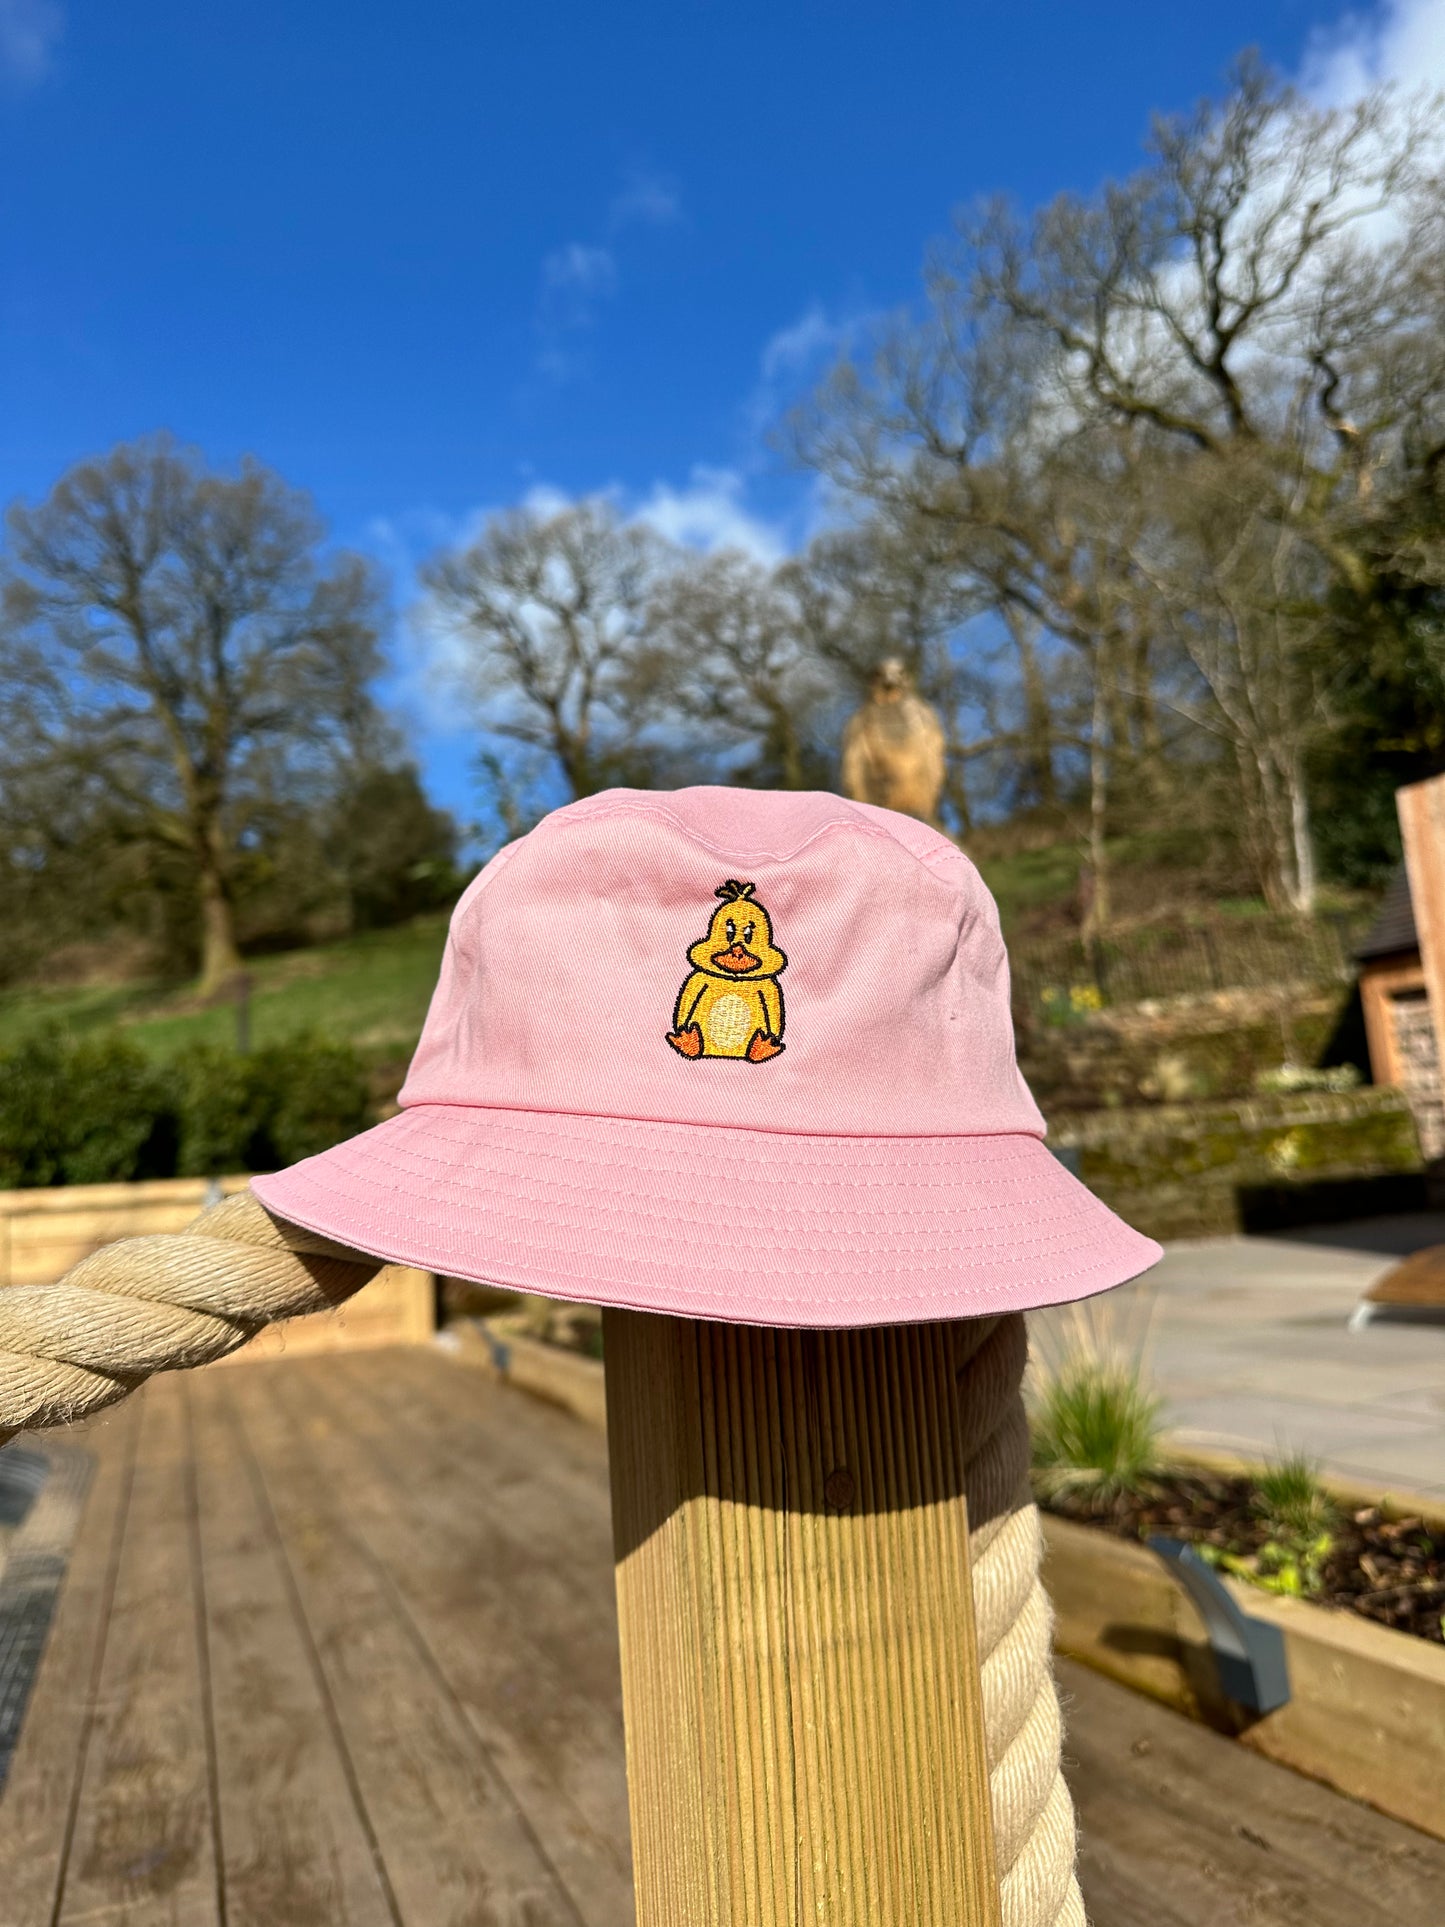 The Official Duckett's Bucket Hat - Pink